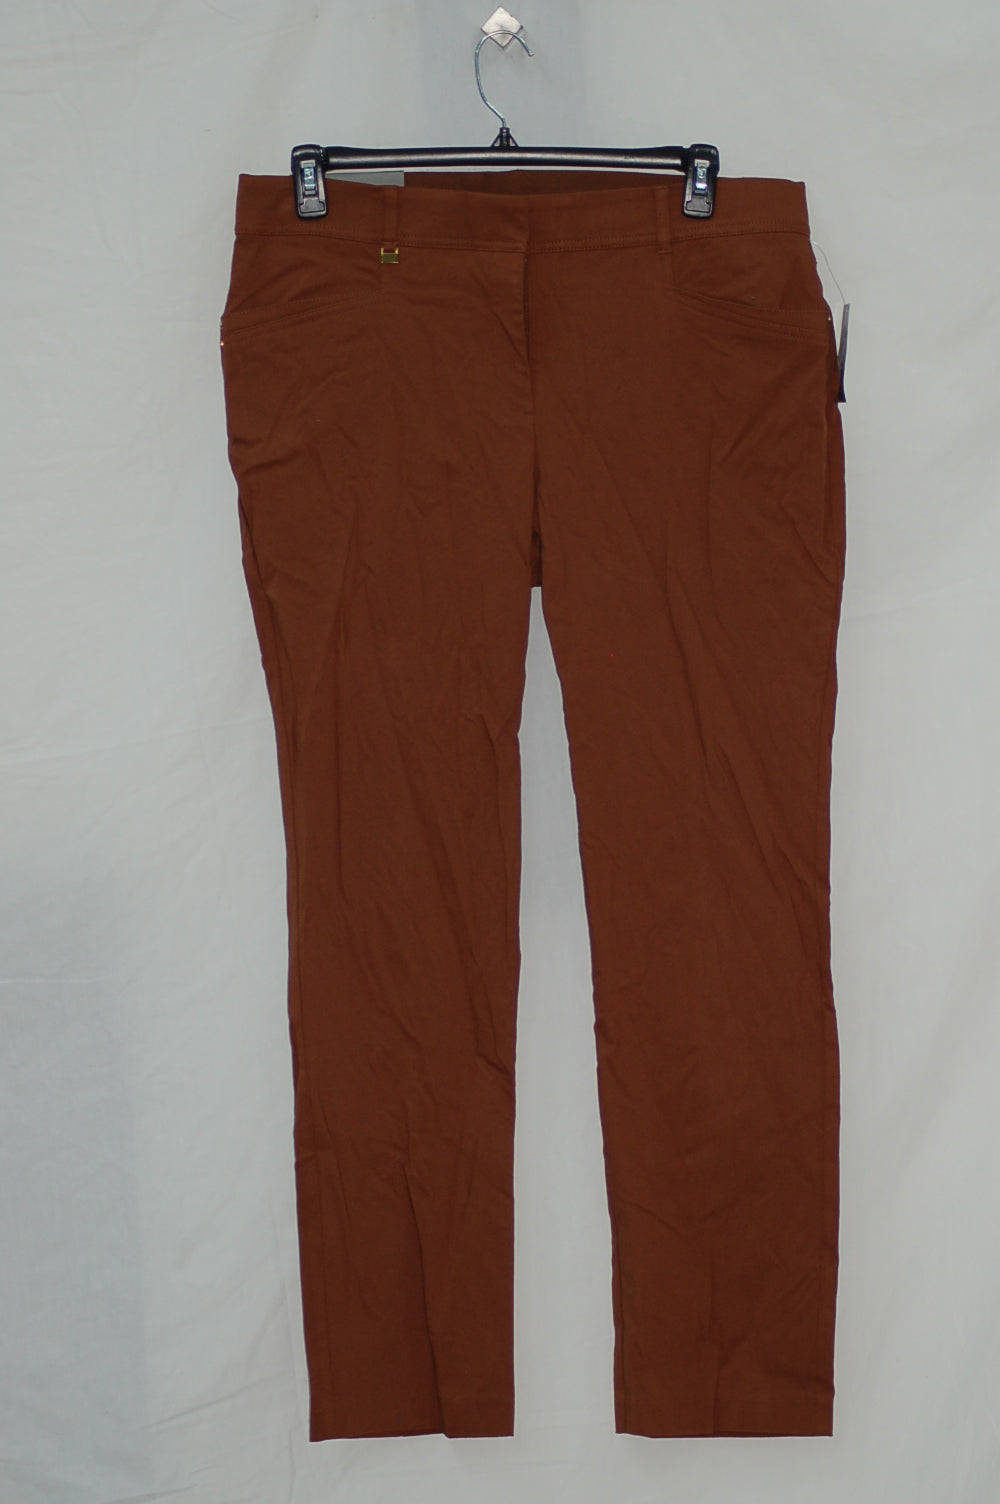 JM Collection Women's Regular Length Curvy-Fit Pants Brown 16